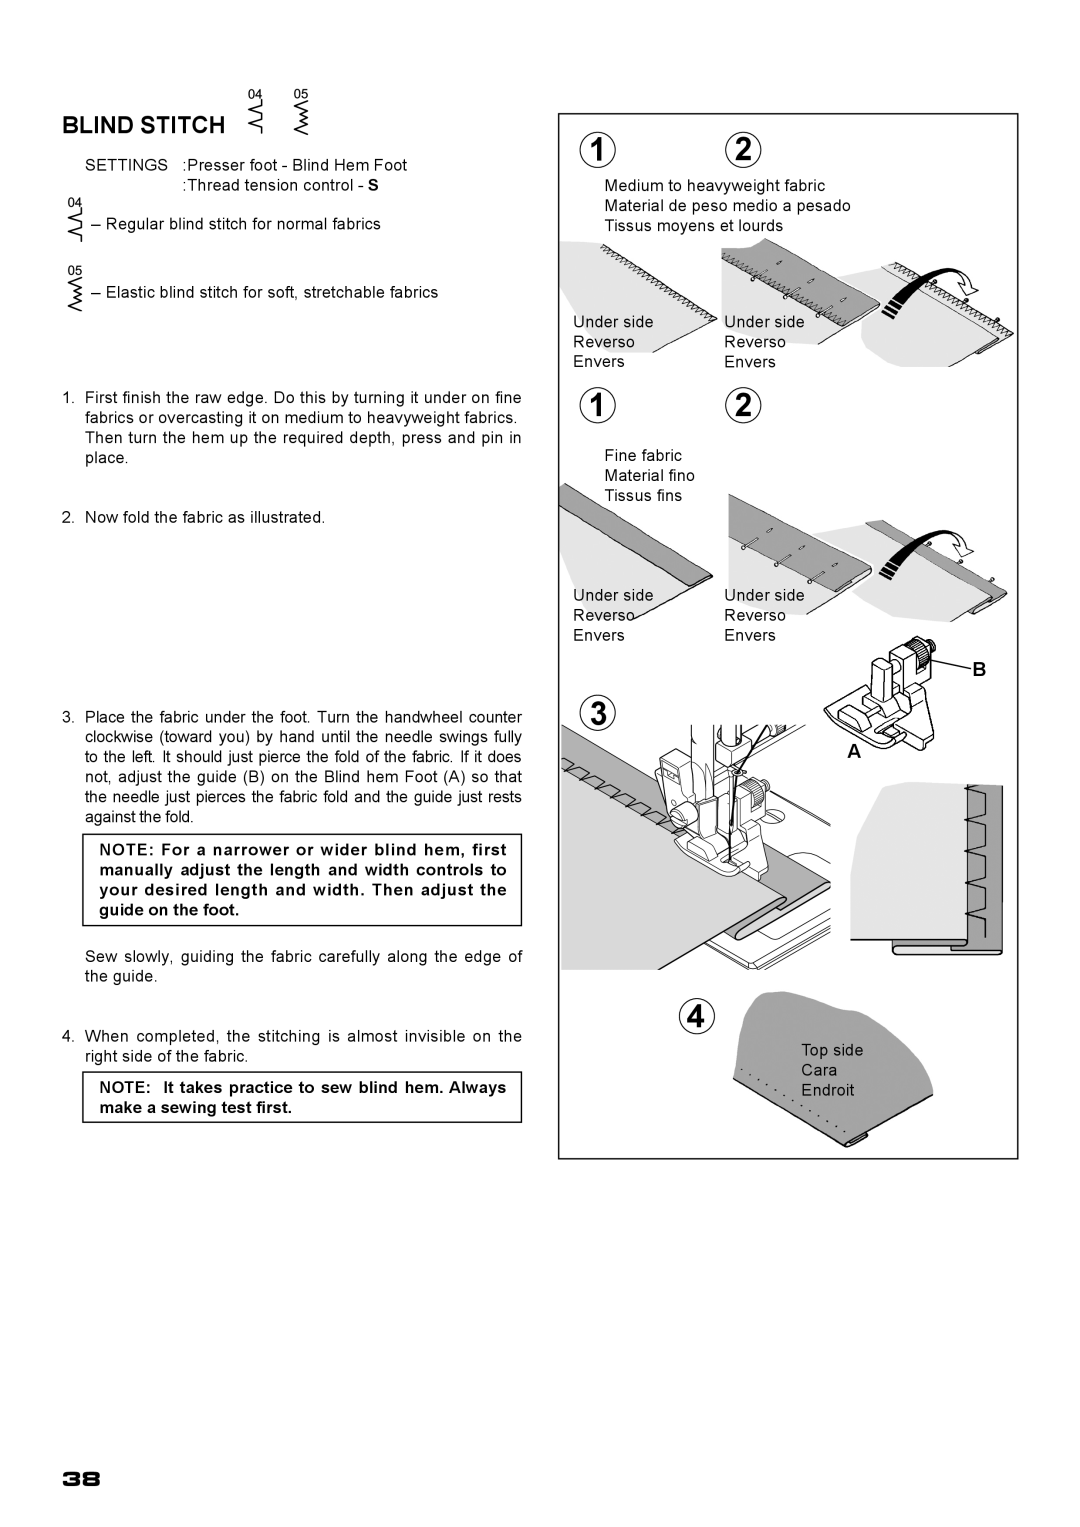 Singer XL-400 instruction manual Blind Stitch 